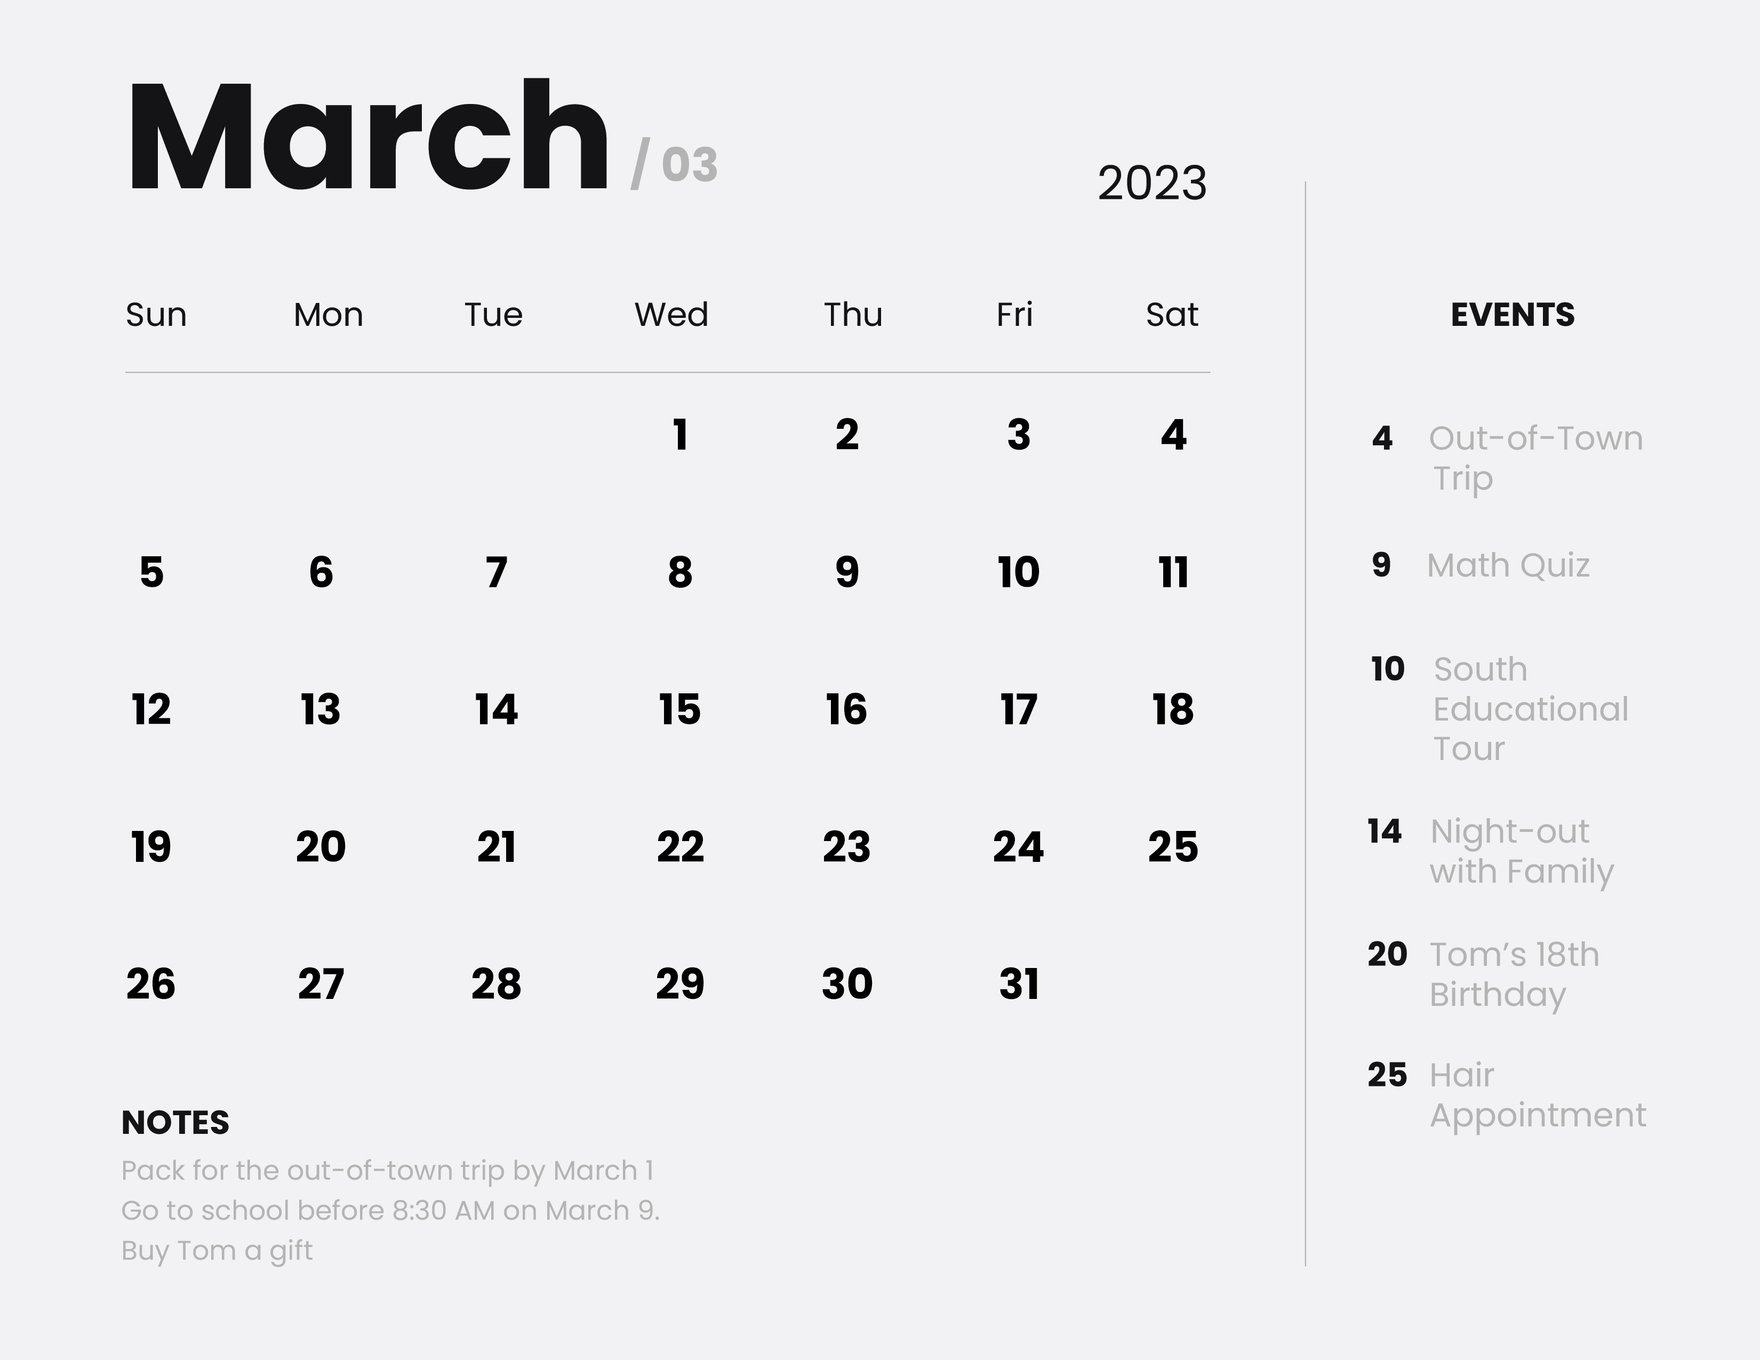 Free Simple March 2023 Calendar Template in Word, Google Docs, Illustrator, PSD